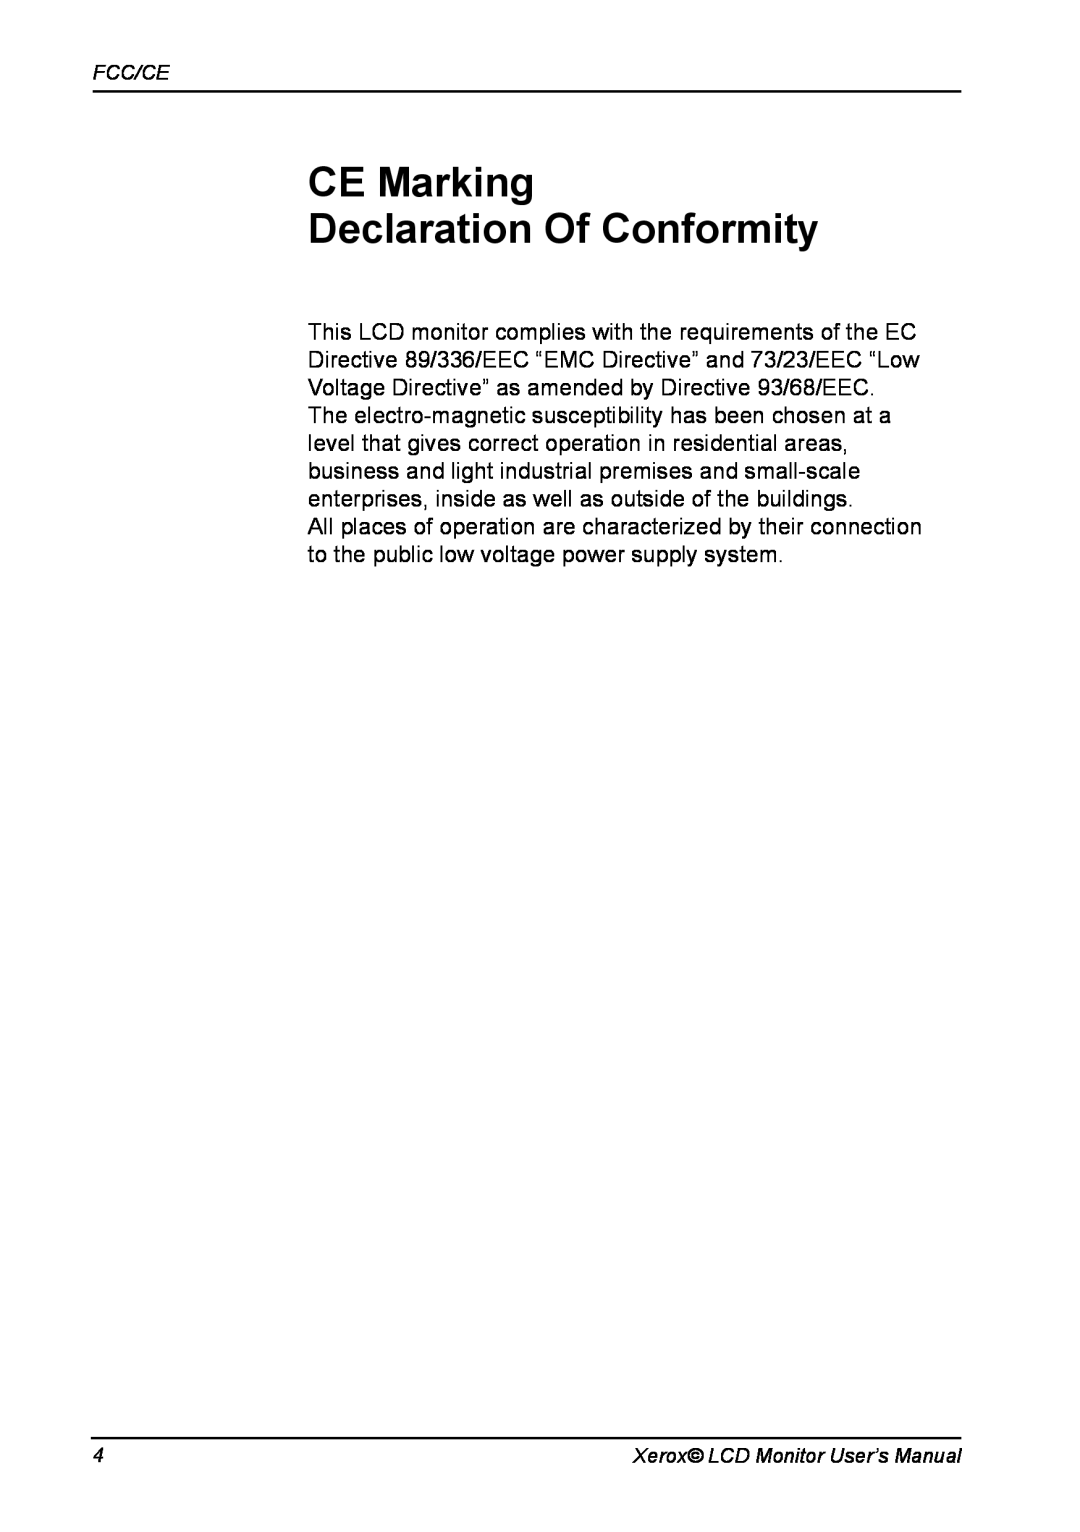 Xerox XR6 Series manual CE Marking Declaration Of Conformity, Fcc/Ce 